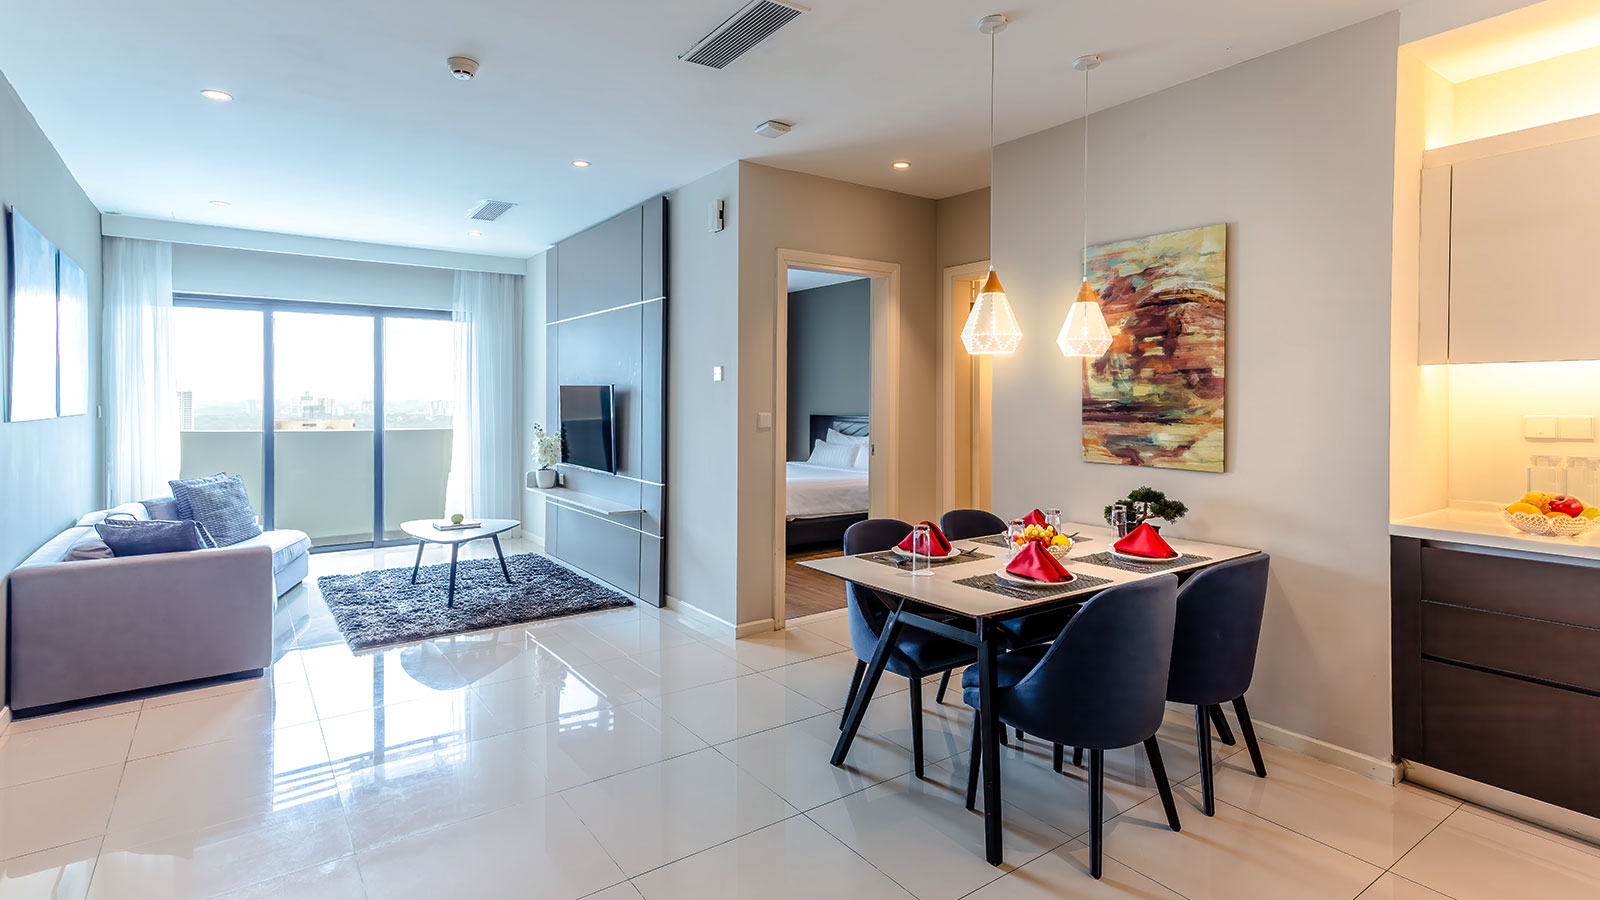 Shama Suasana Johor Bahru - One Bedroom Suite Living and Dining Area - Shama Suasana Johor Bahru